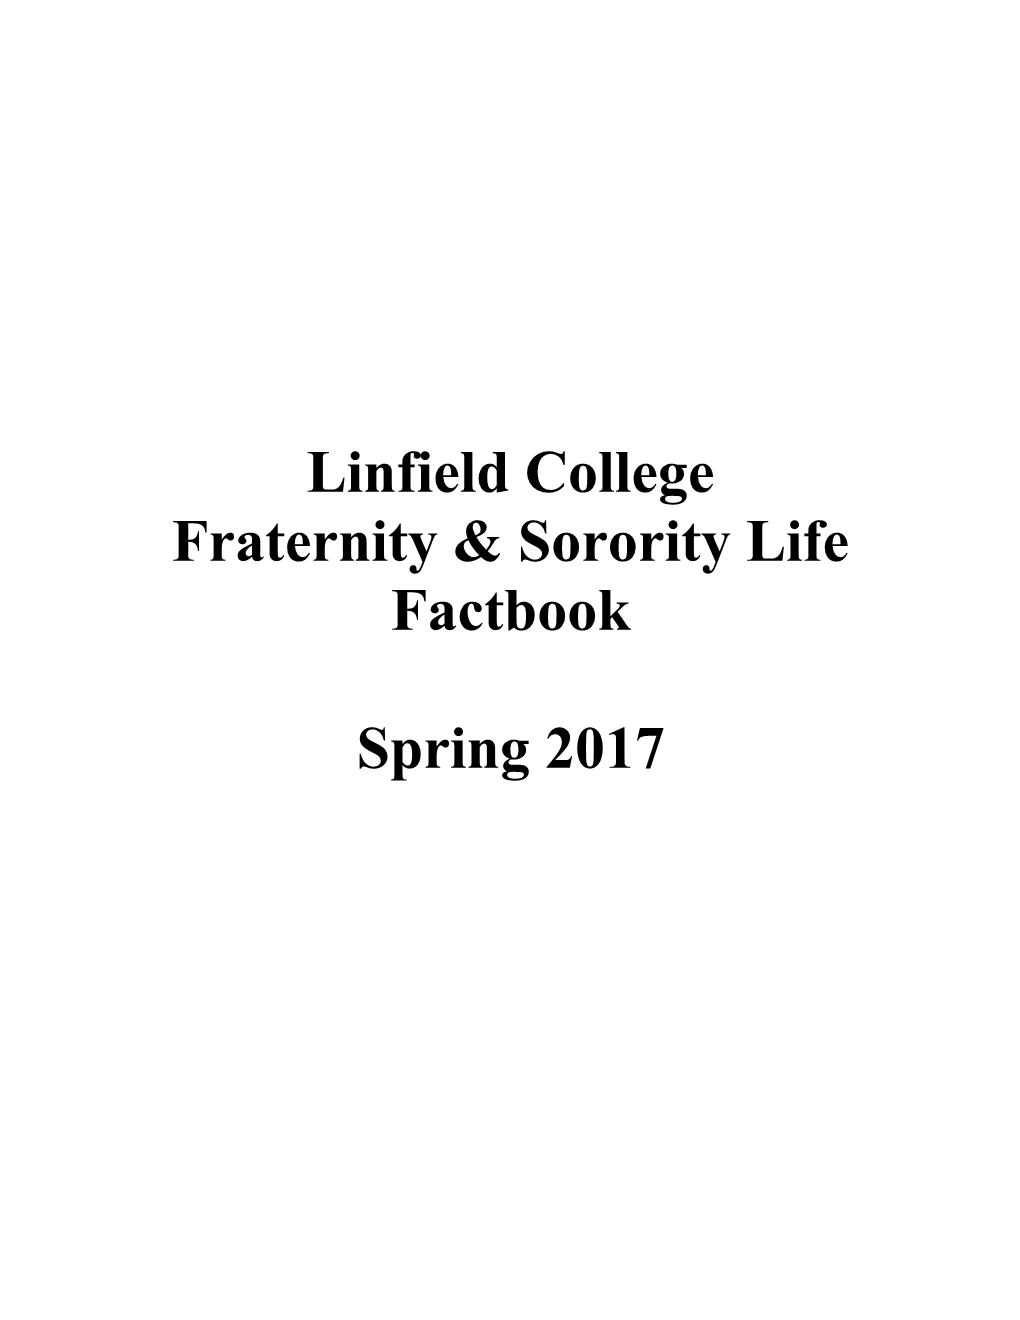 Fraternity & Sorority Life Factbook